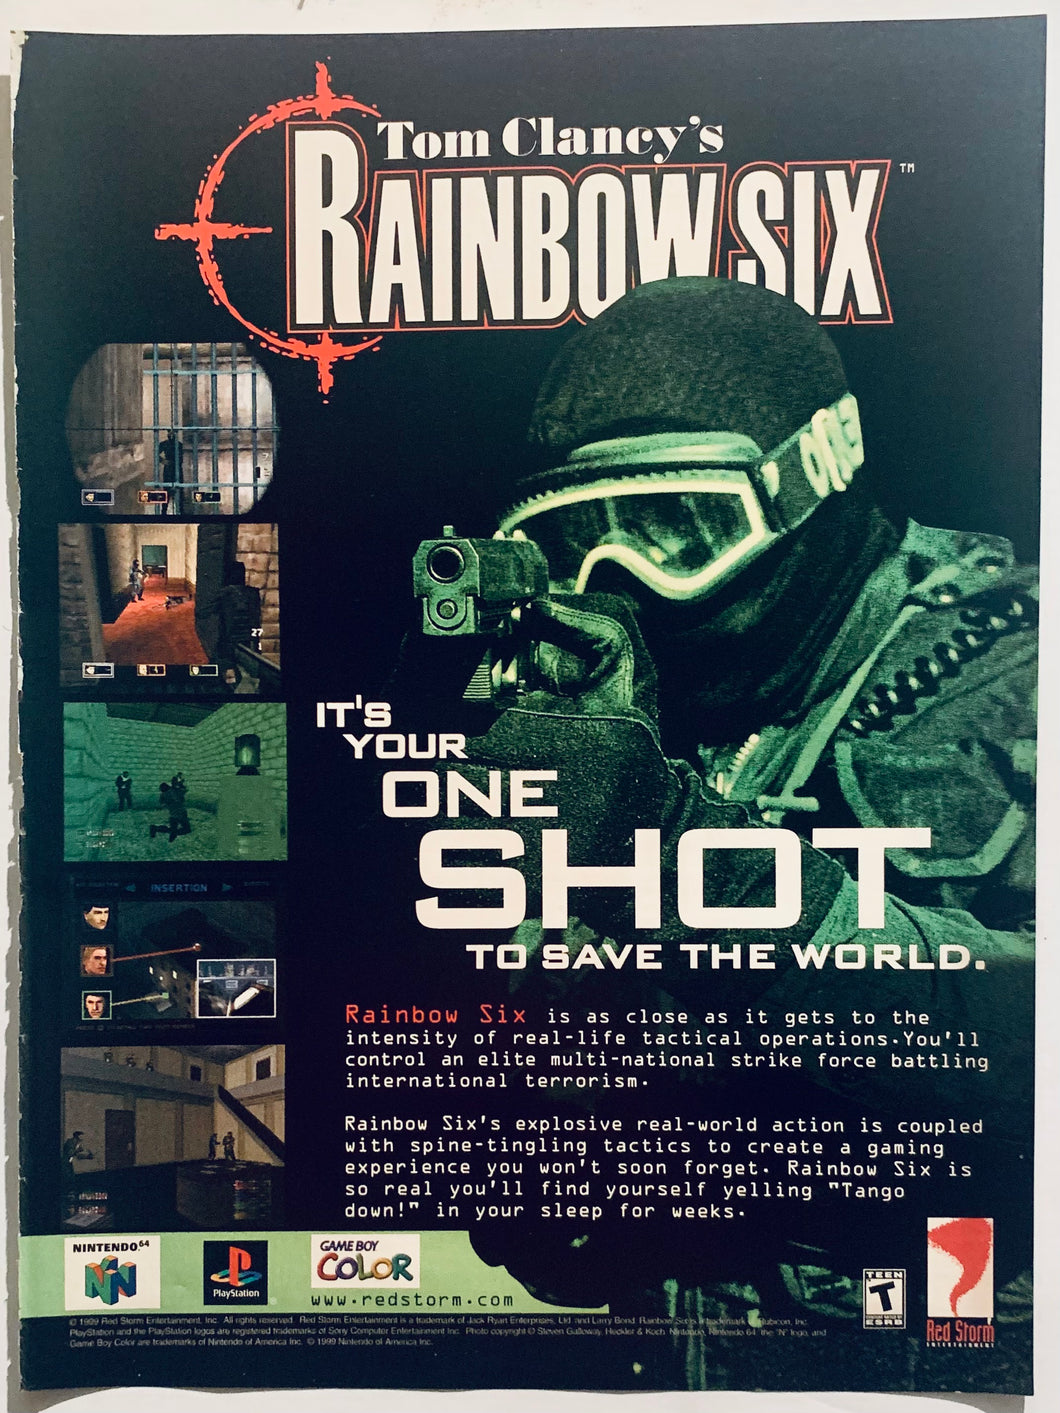 Tom Clancy’s Rainbow Six - PS1 N64 GBC - Original Vintage Advertisement - Print Ads - Laminated A4 Poster